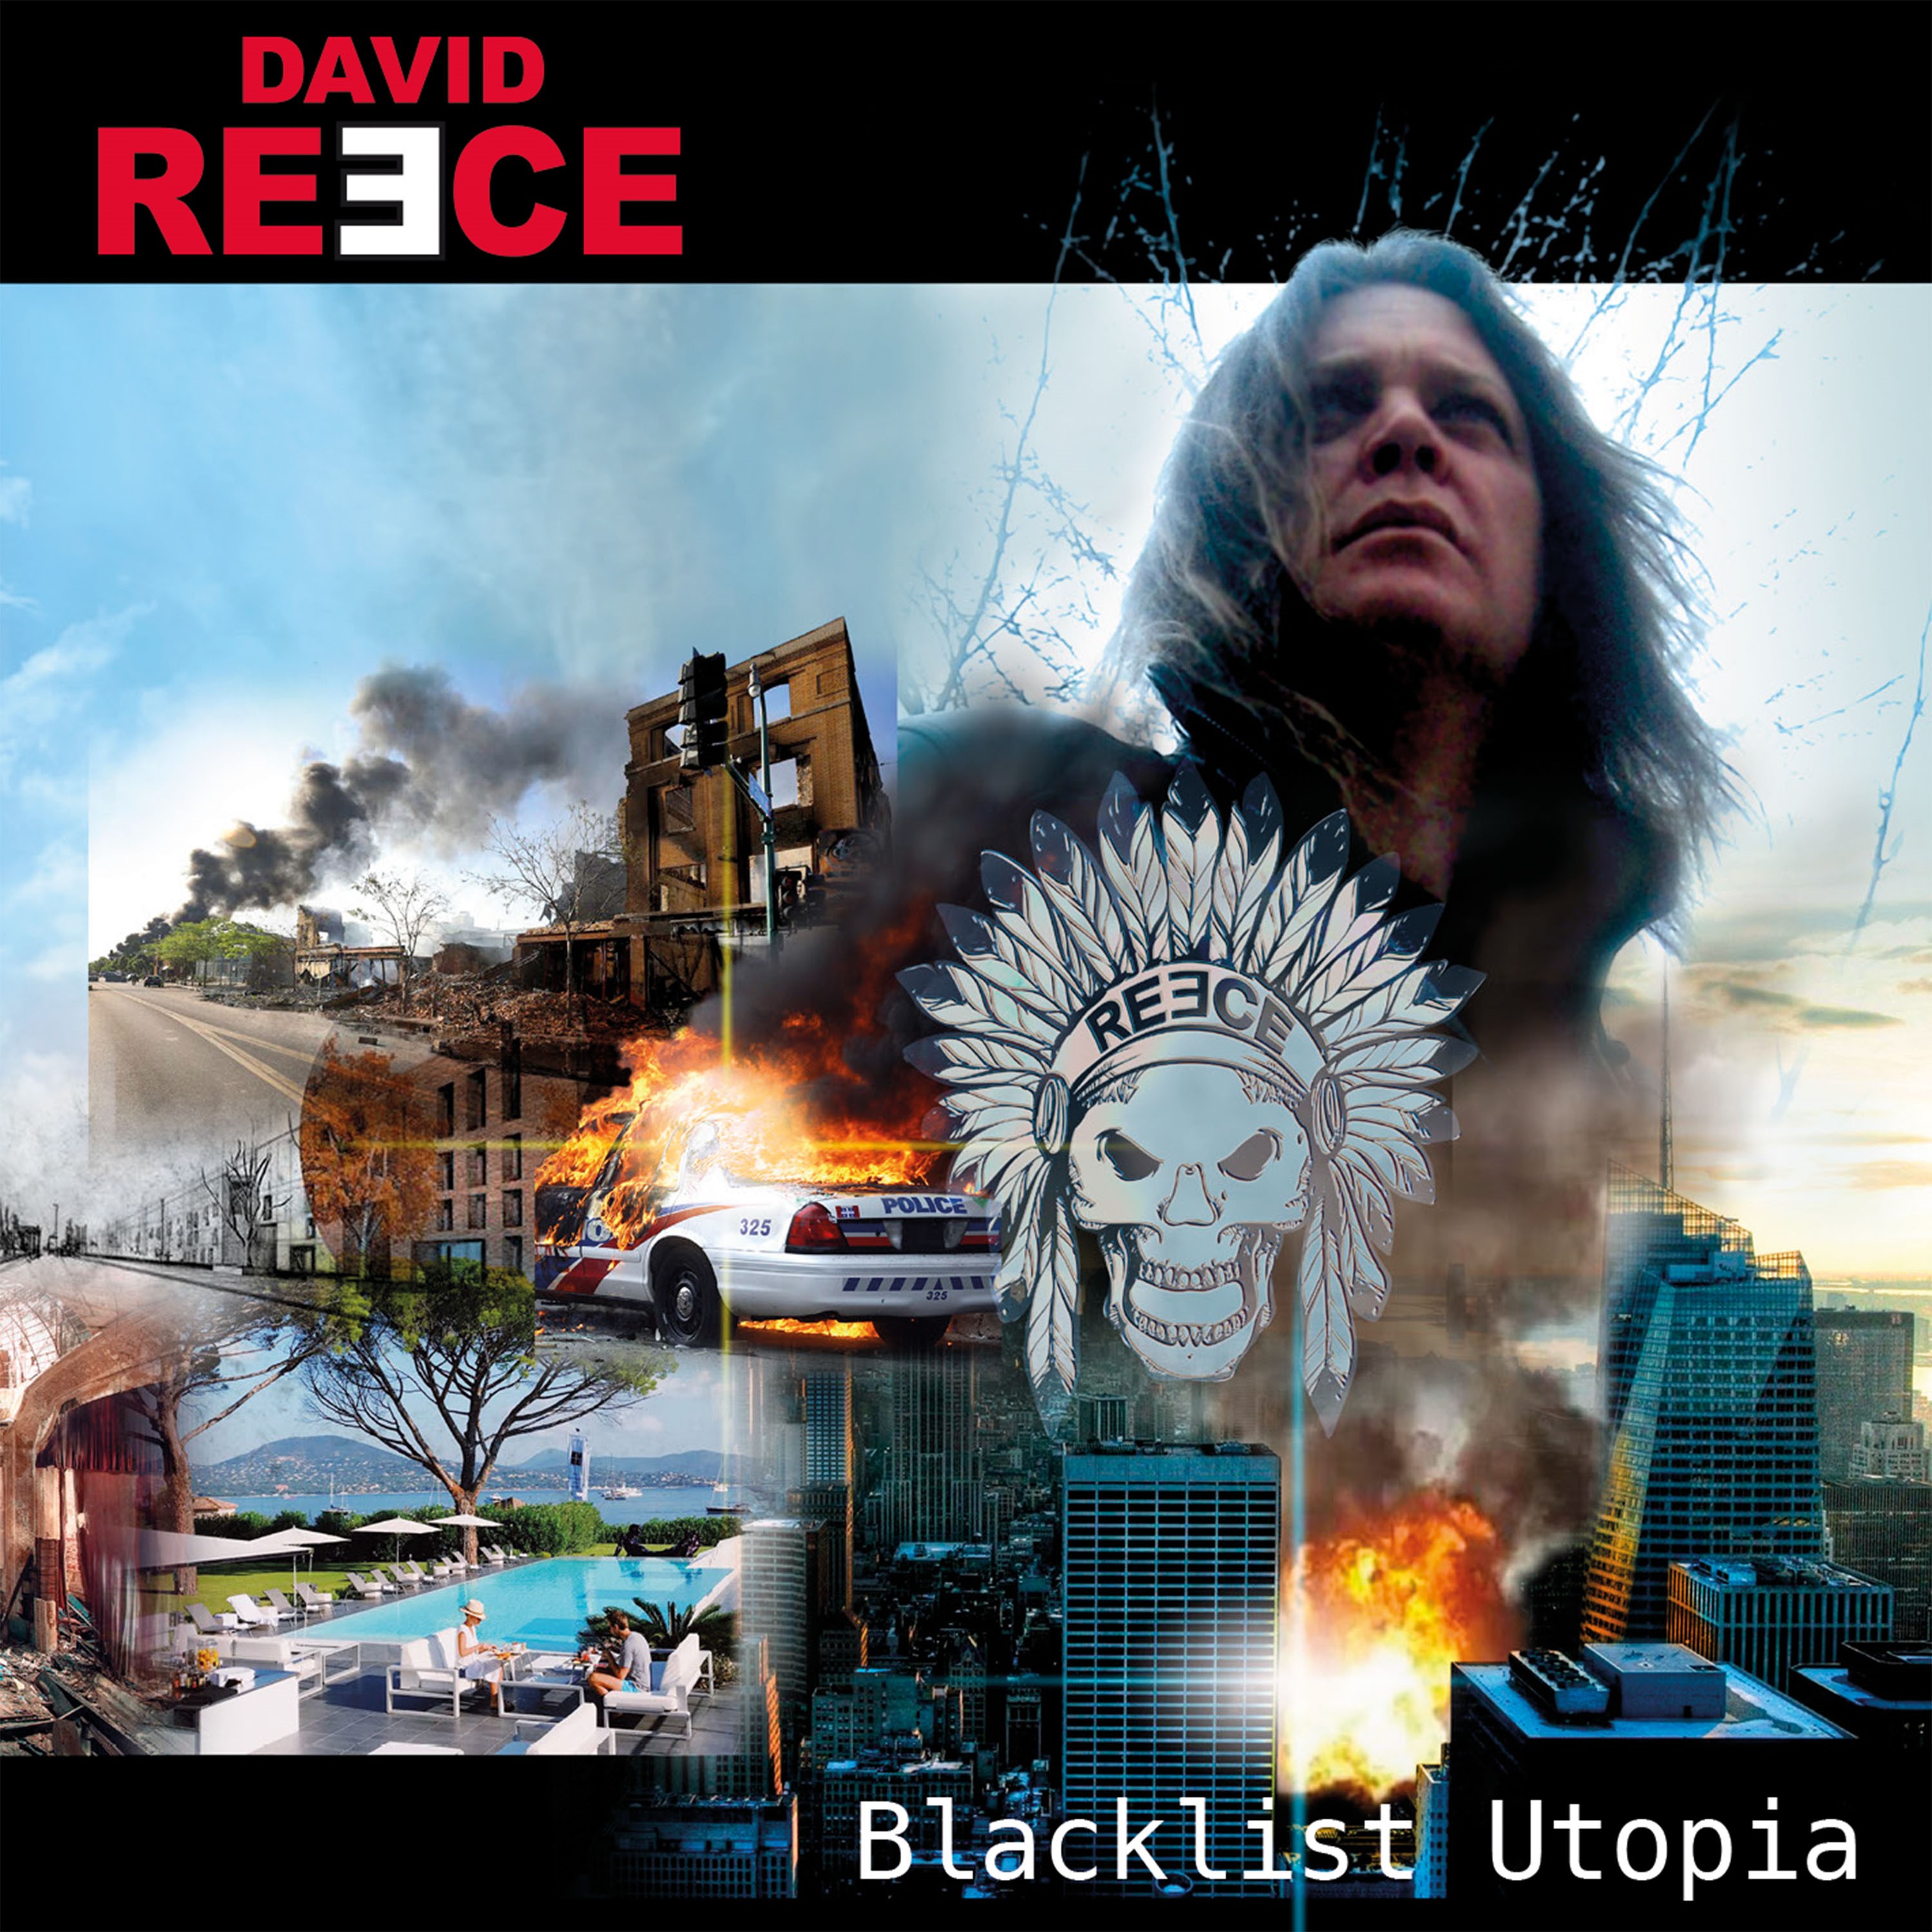 David reece. David Reece Blacklist Utopia 2021. Дэвид рис accept. 2021 — Utopia. David Reece альбомы.